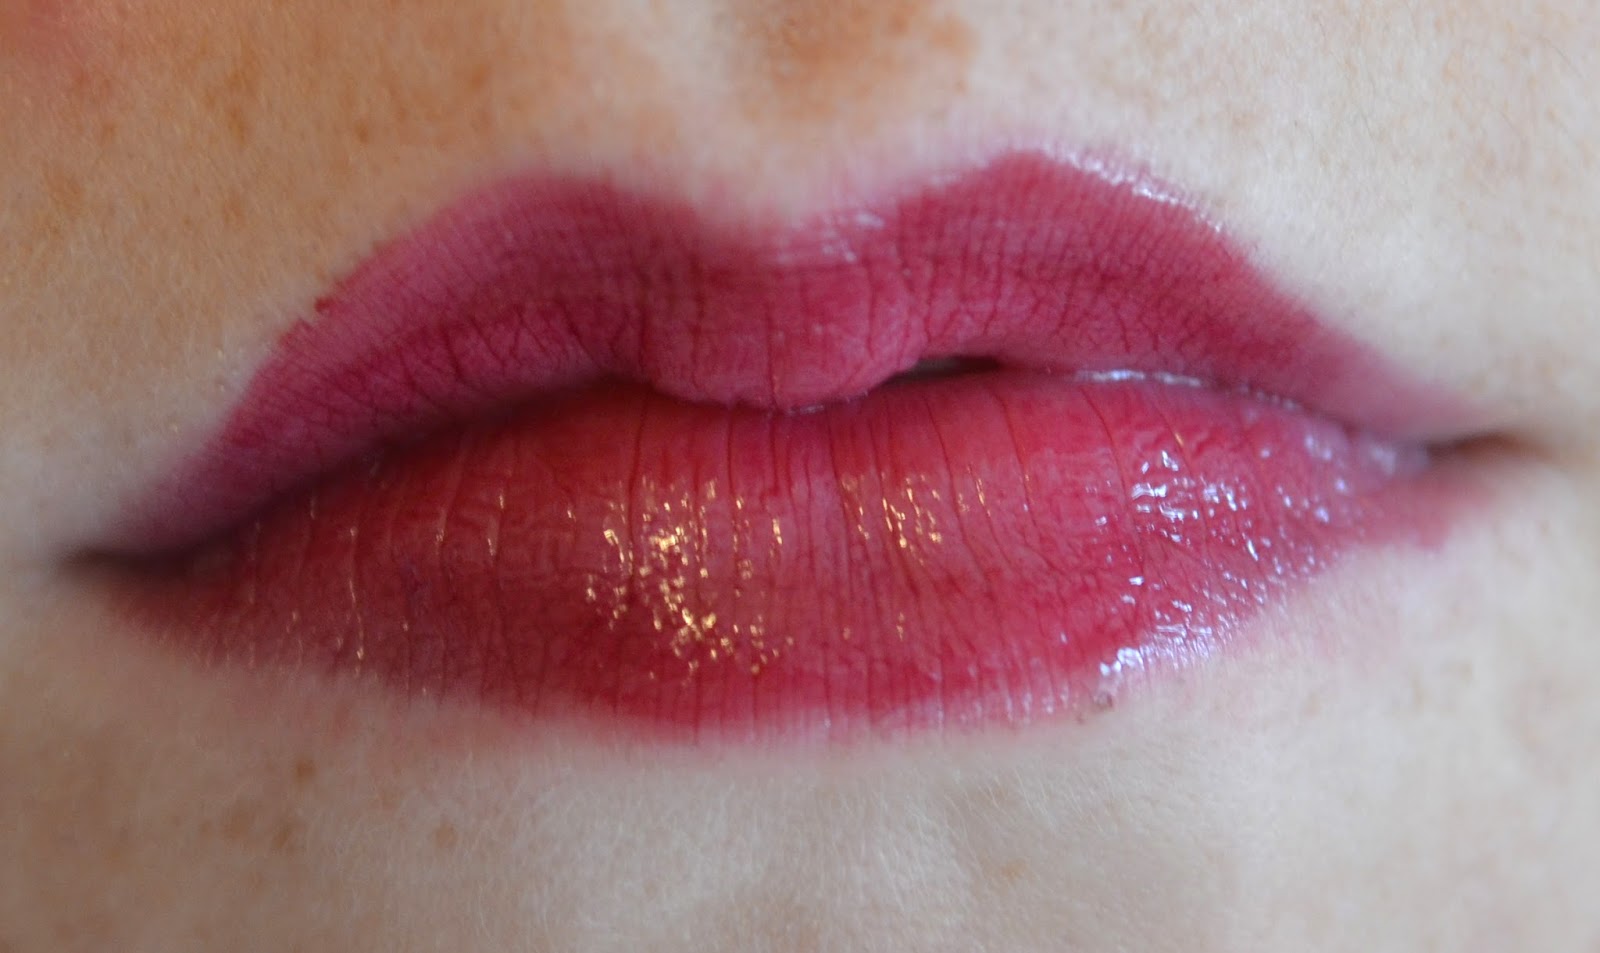 revlon-colorstay-moisture-stain-parisian-passion-on-lips